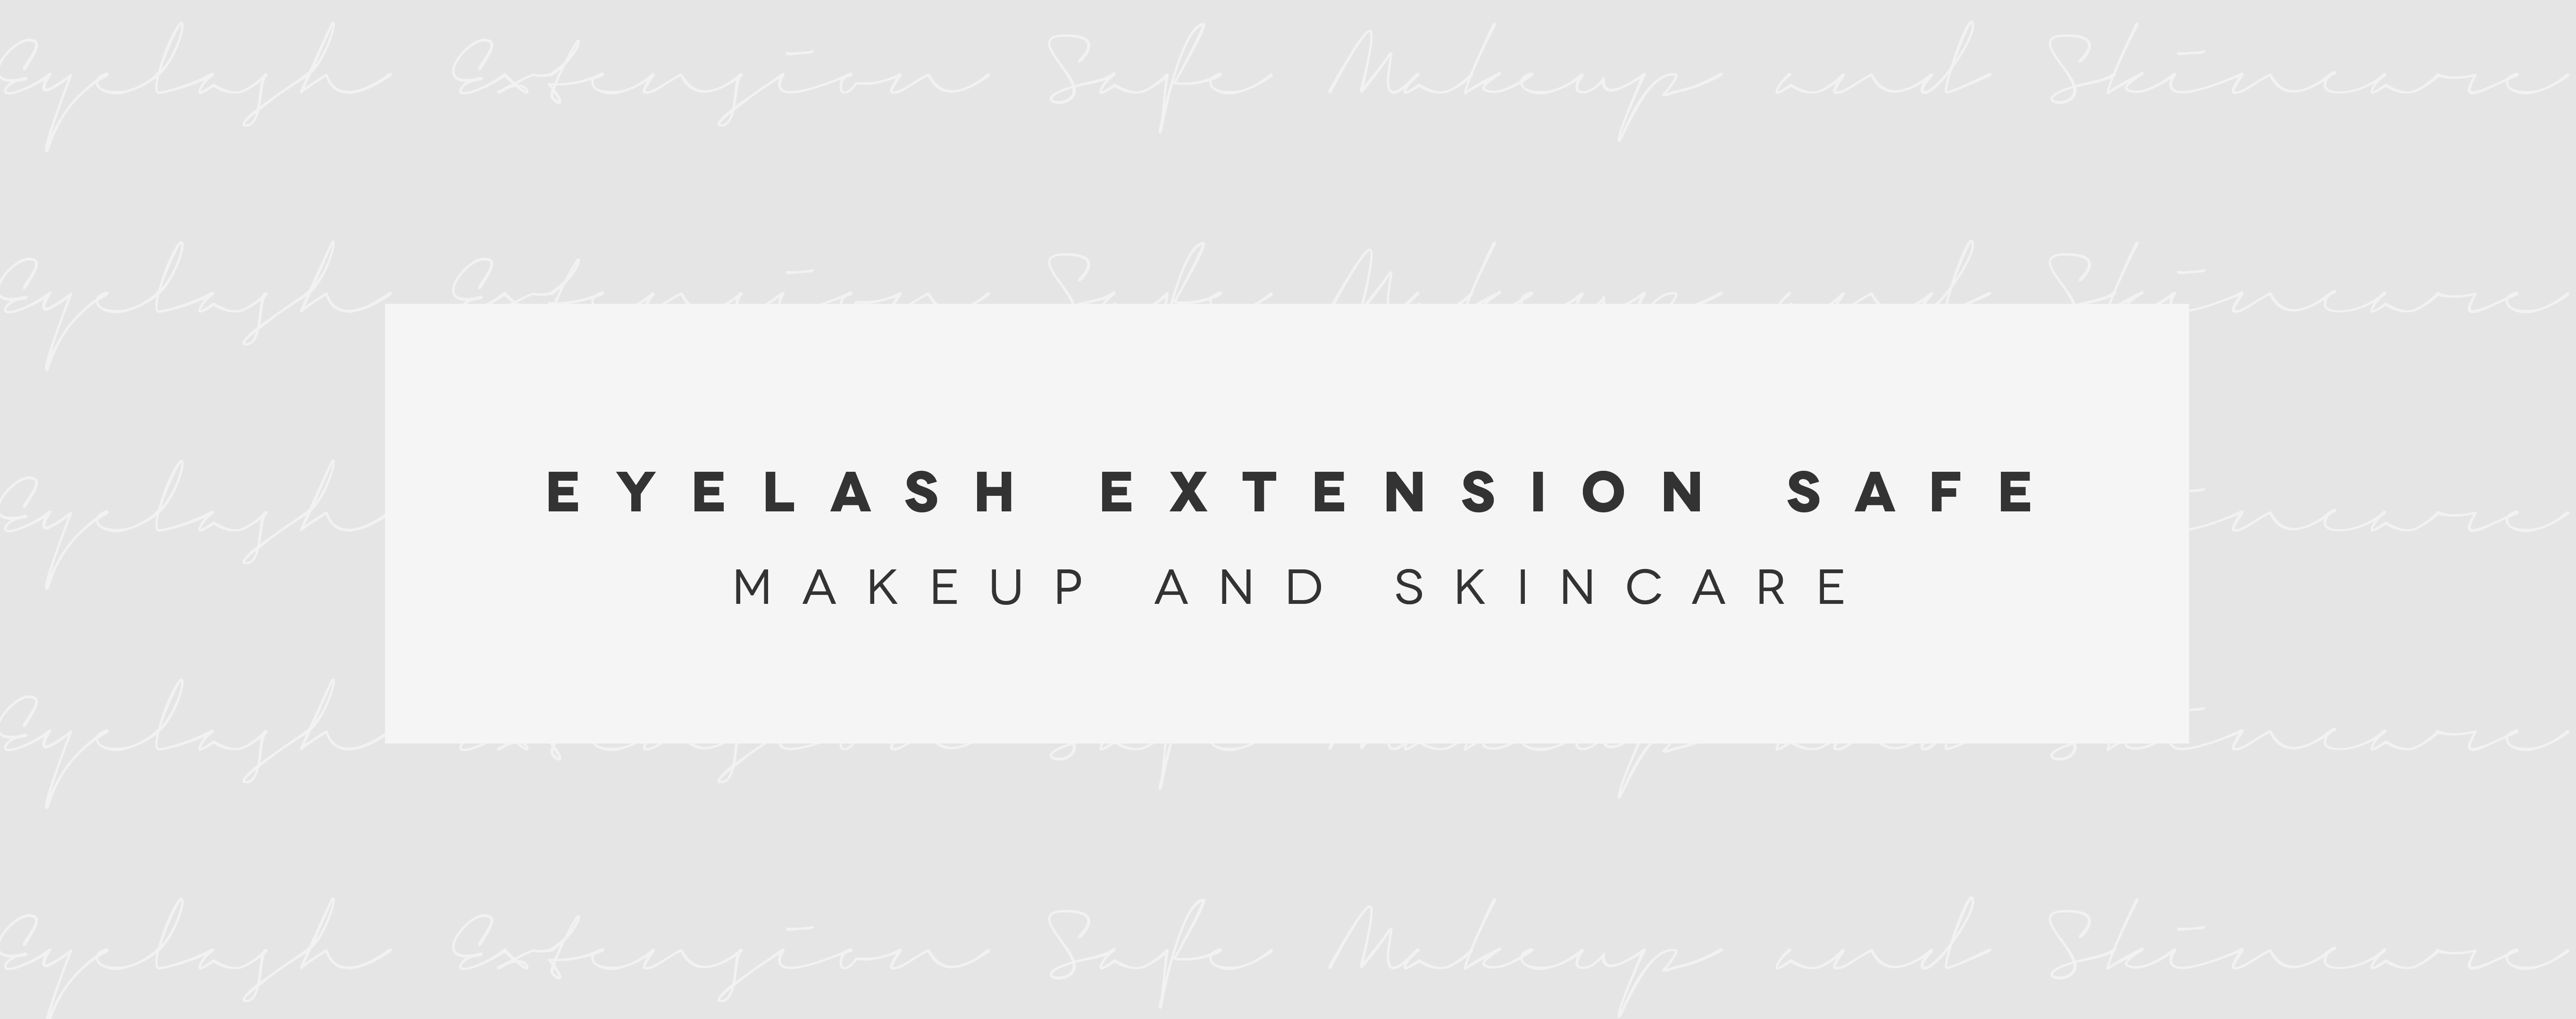 Eyelash Extension Safe Makeup and Skincare